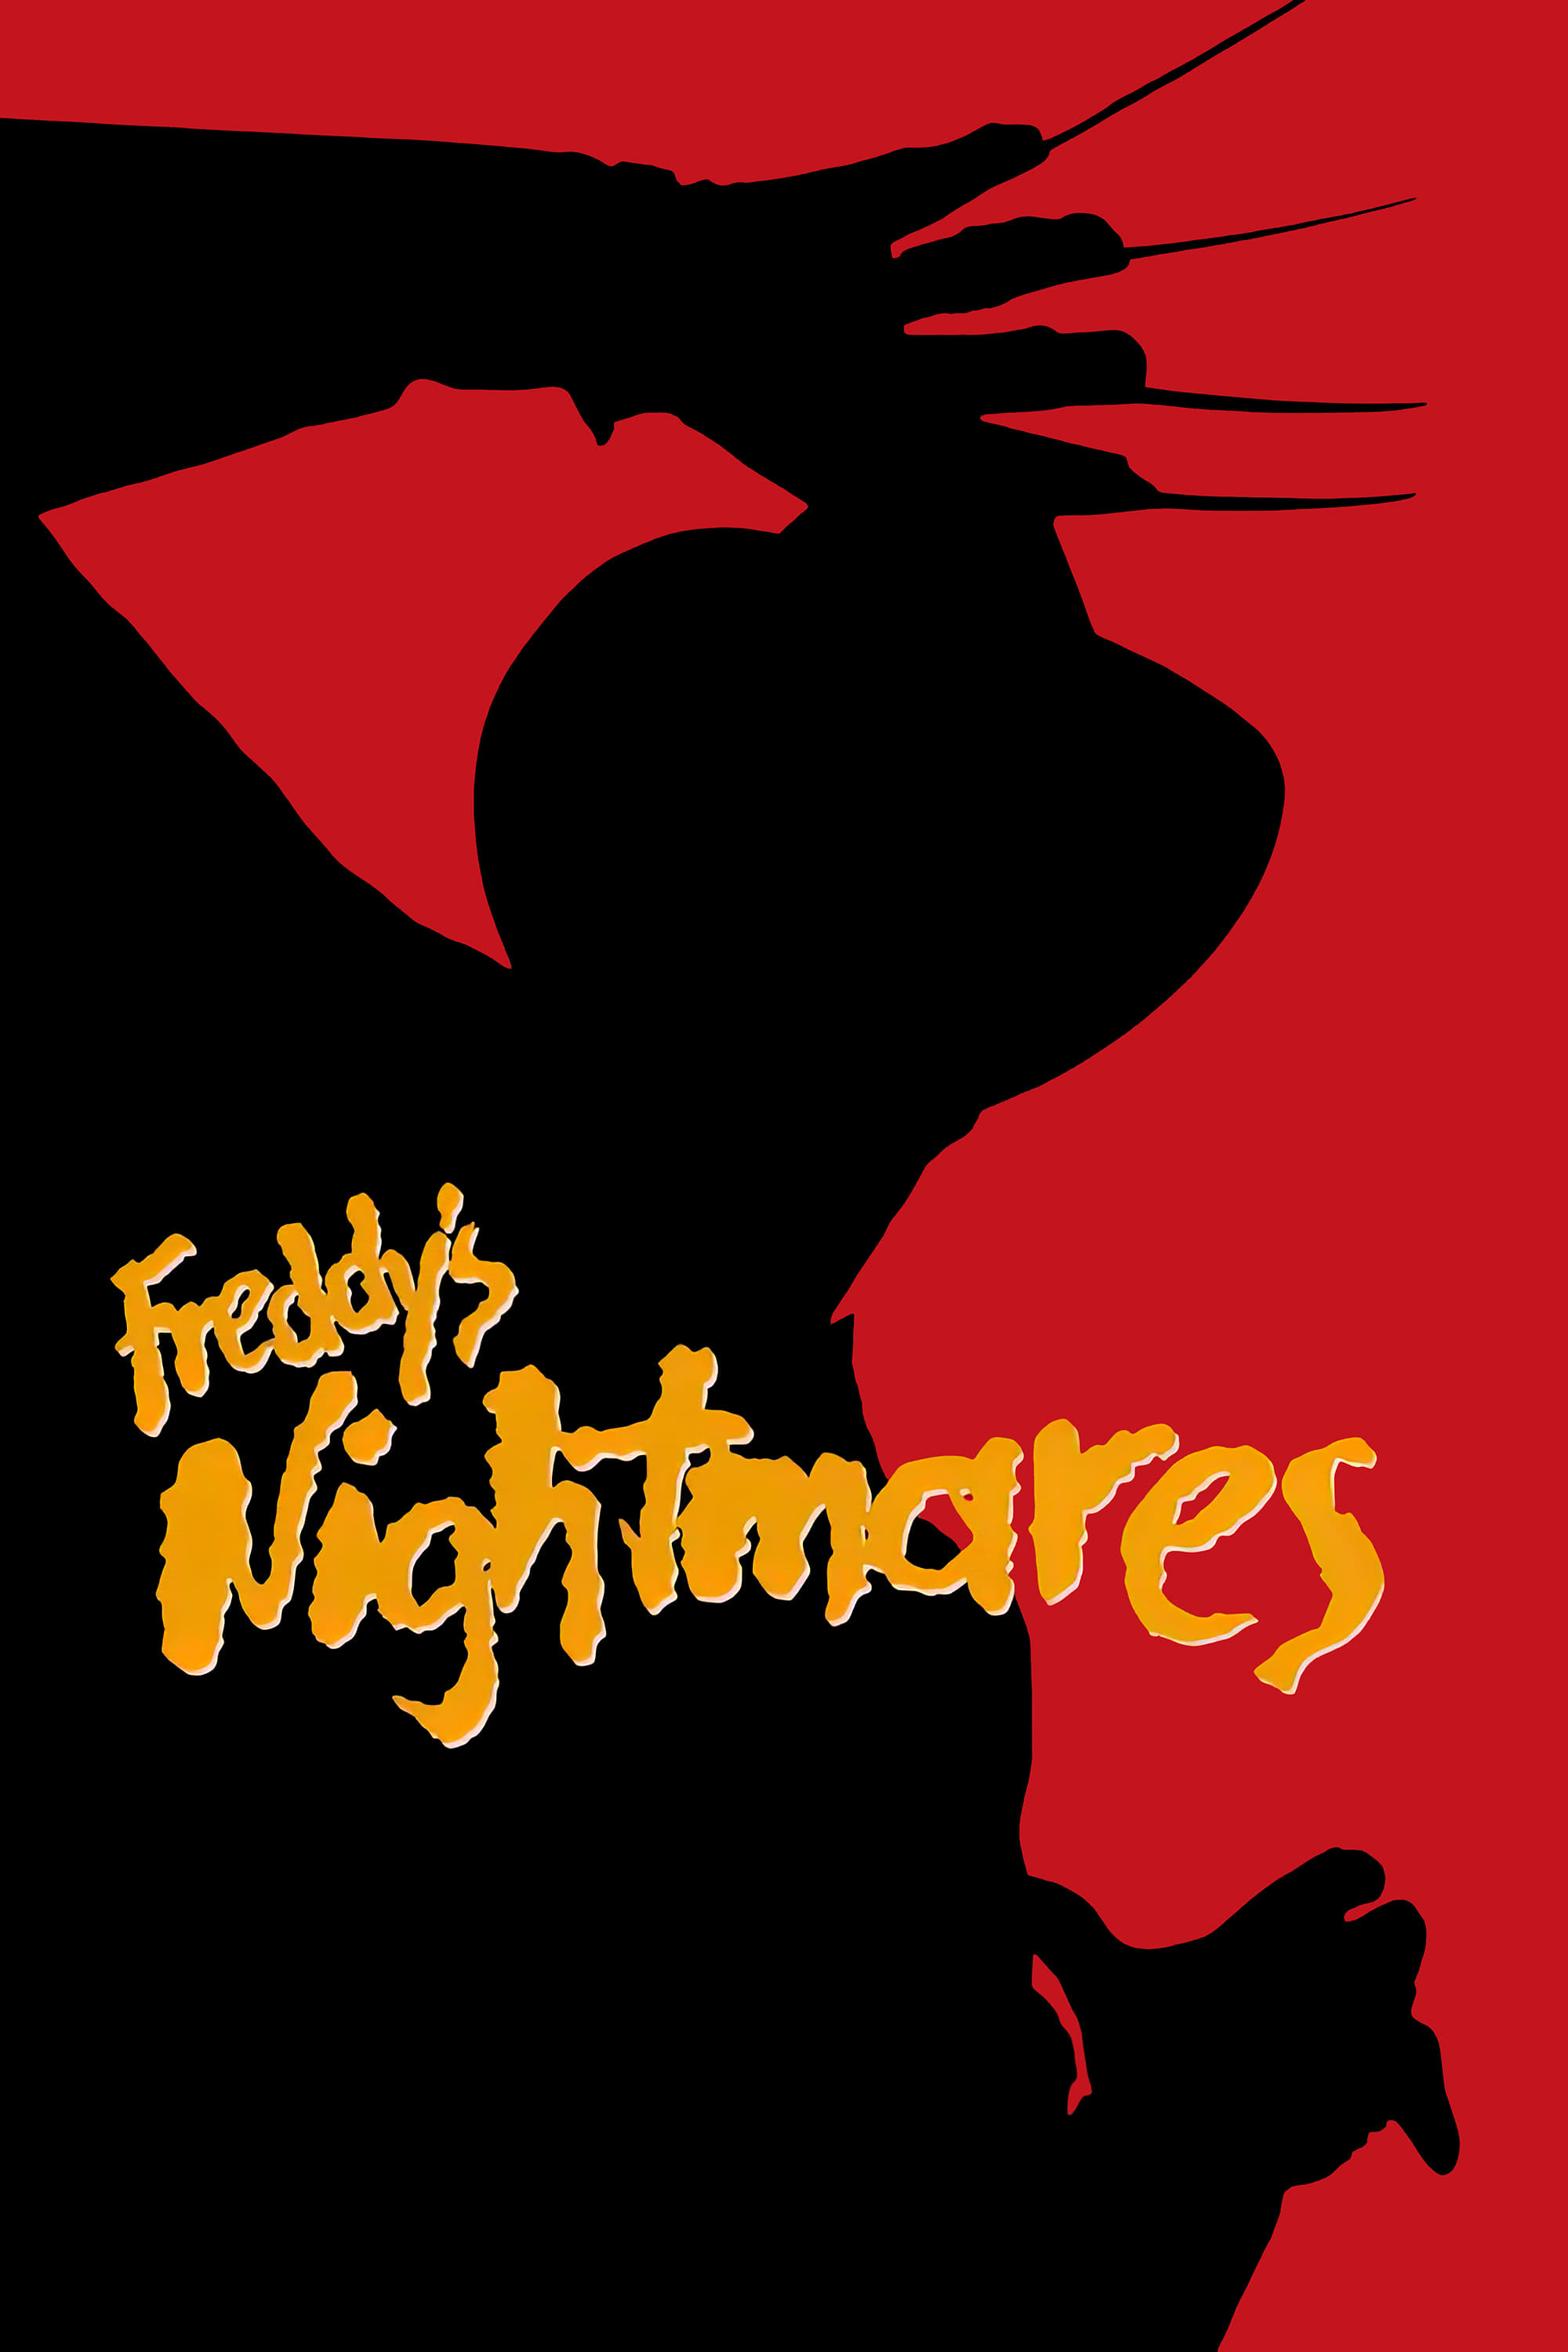 Freddy's Nightmares (1988)